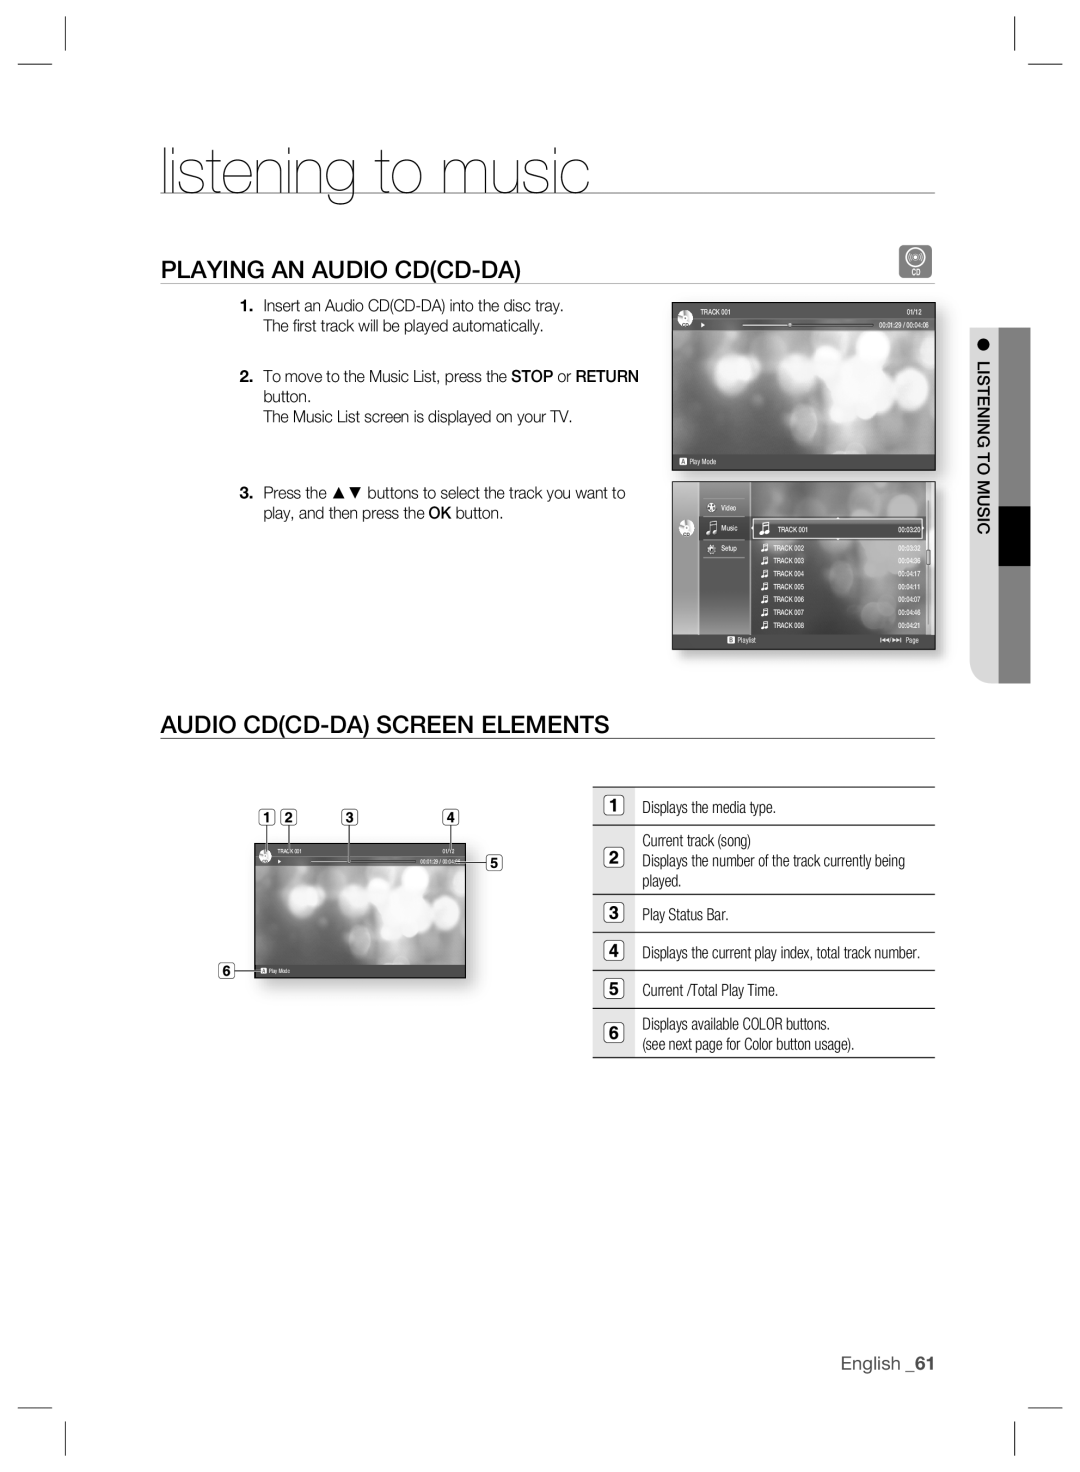 Samsung BD-P2500/XEF, BD-P2500/EDC listening to music, Playing An Audio Cdcd-Da, Audio Cdcd-Da Screen Elements, English 